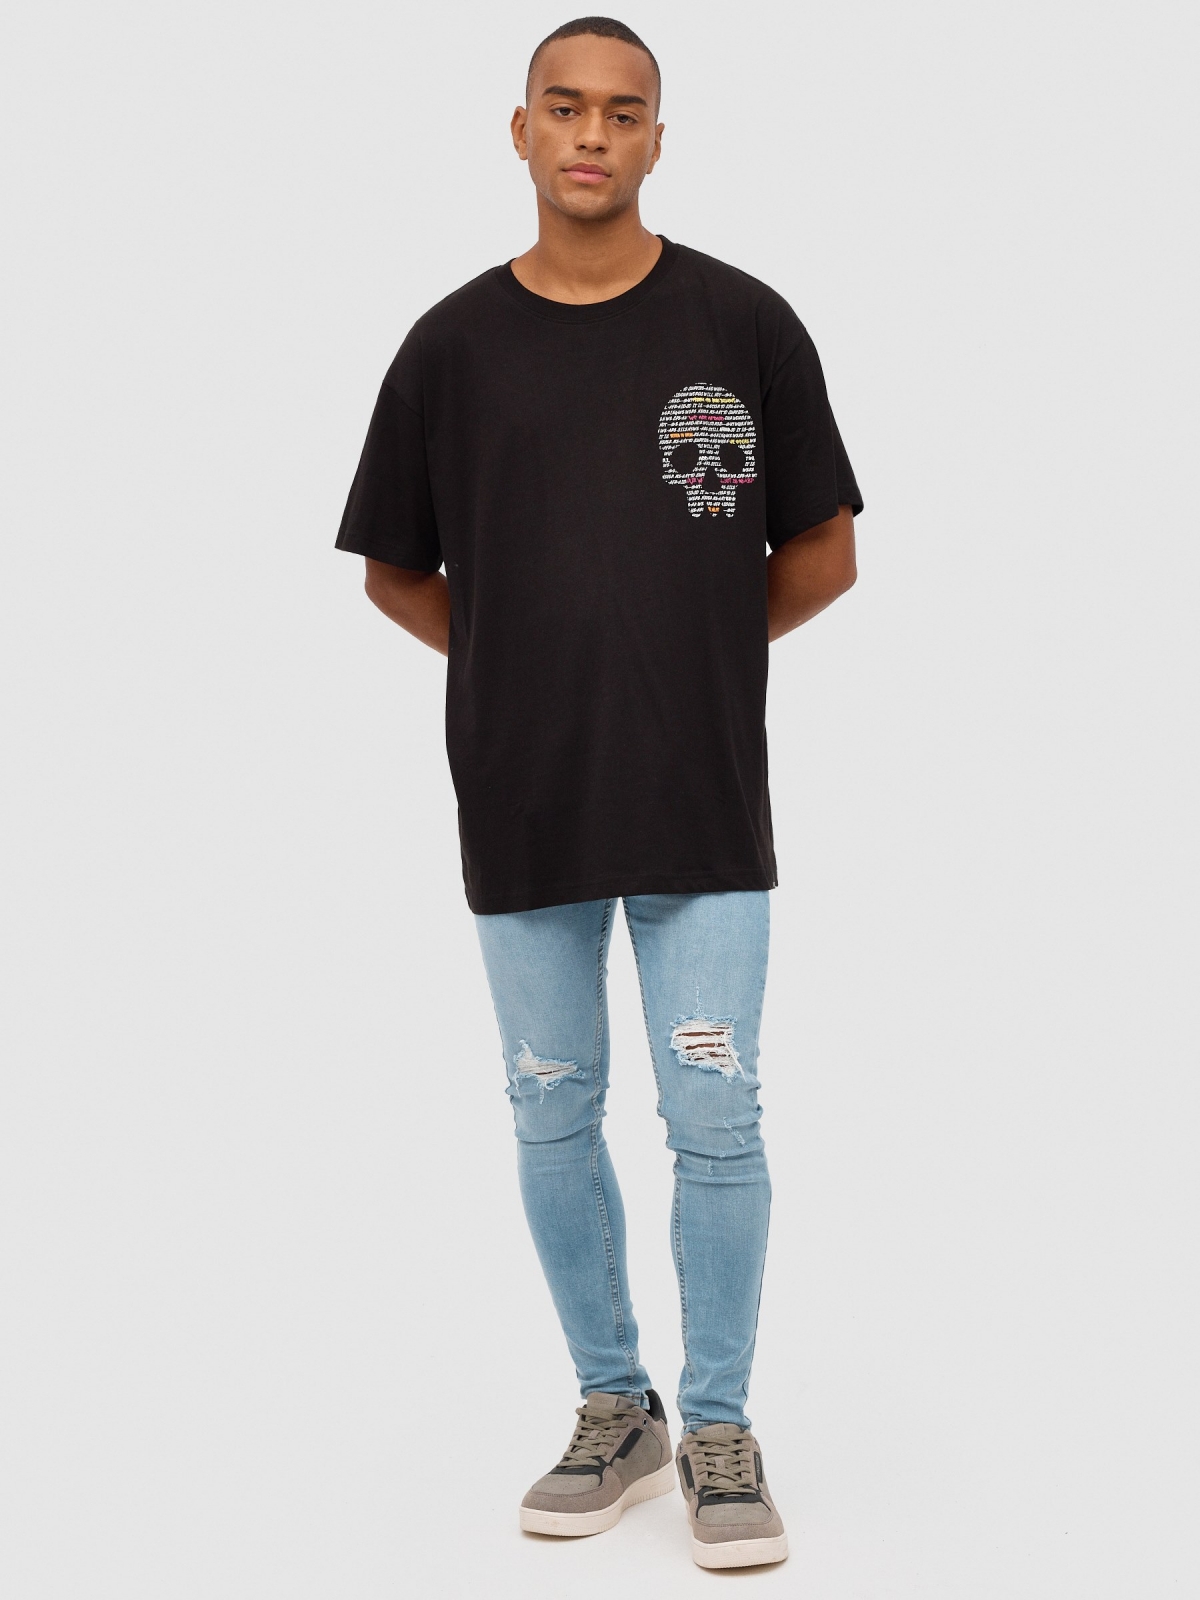 Camiseta calavera texto oversize negro vista general frontal